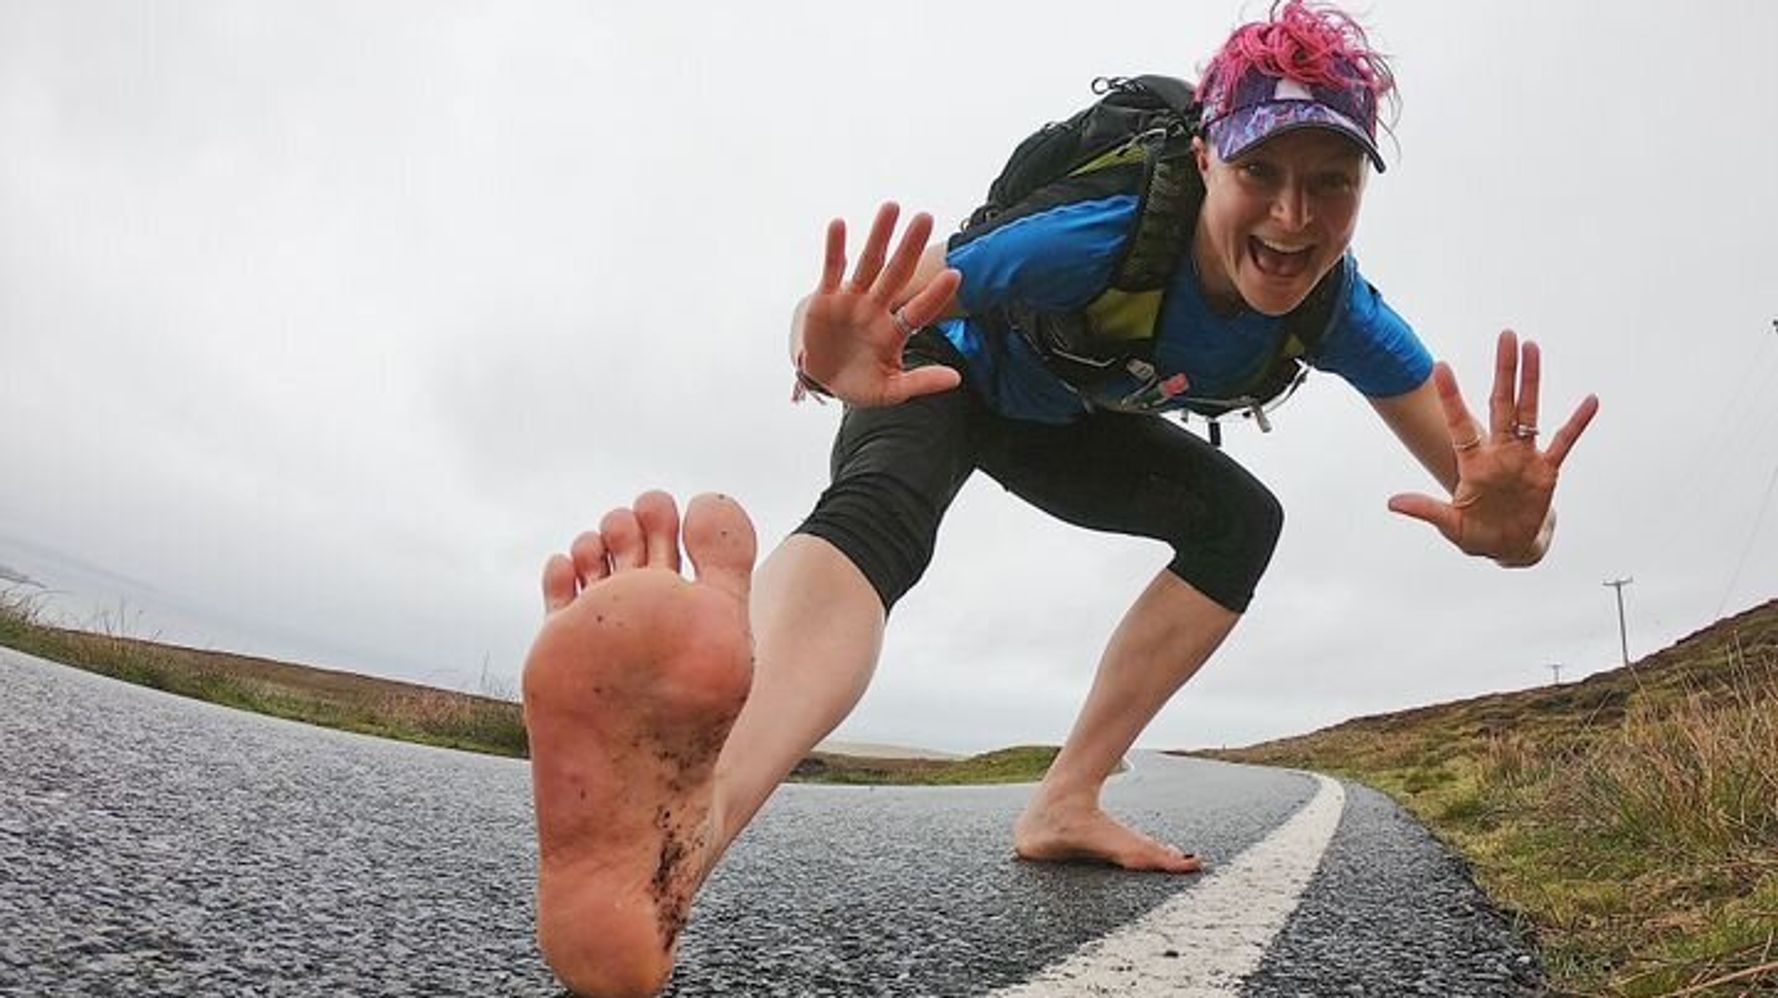 Woman Runs 90 Marathons Barefoot – Here's What Her Feet Look Like